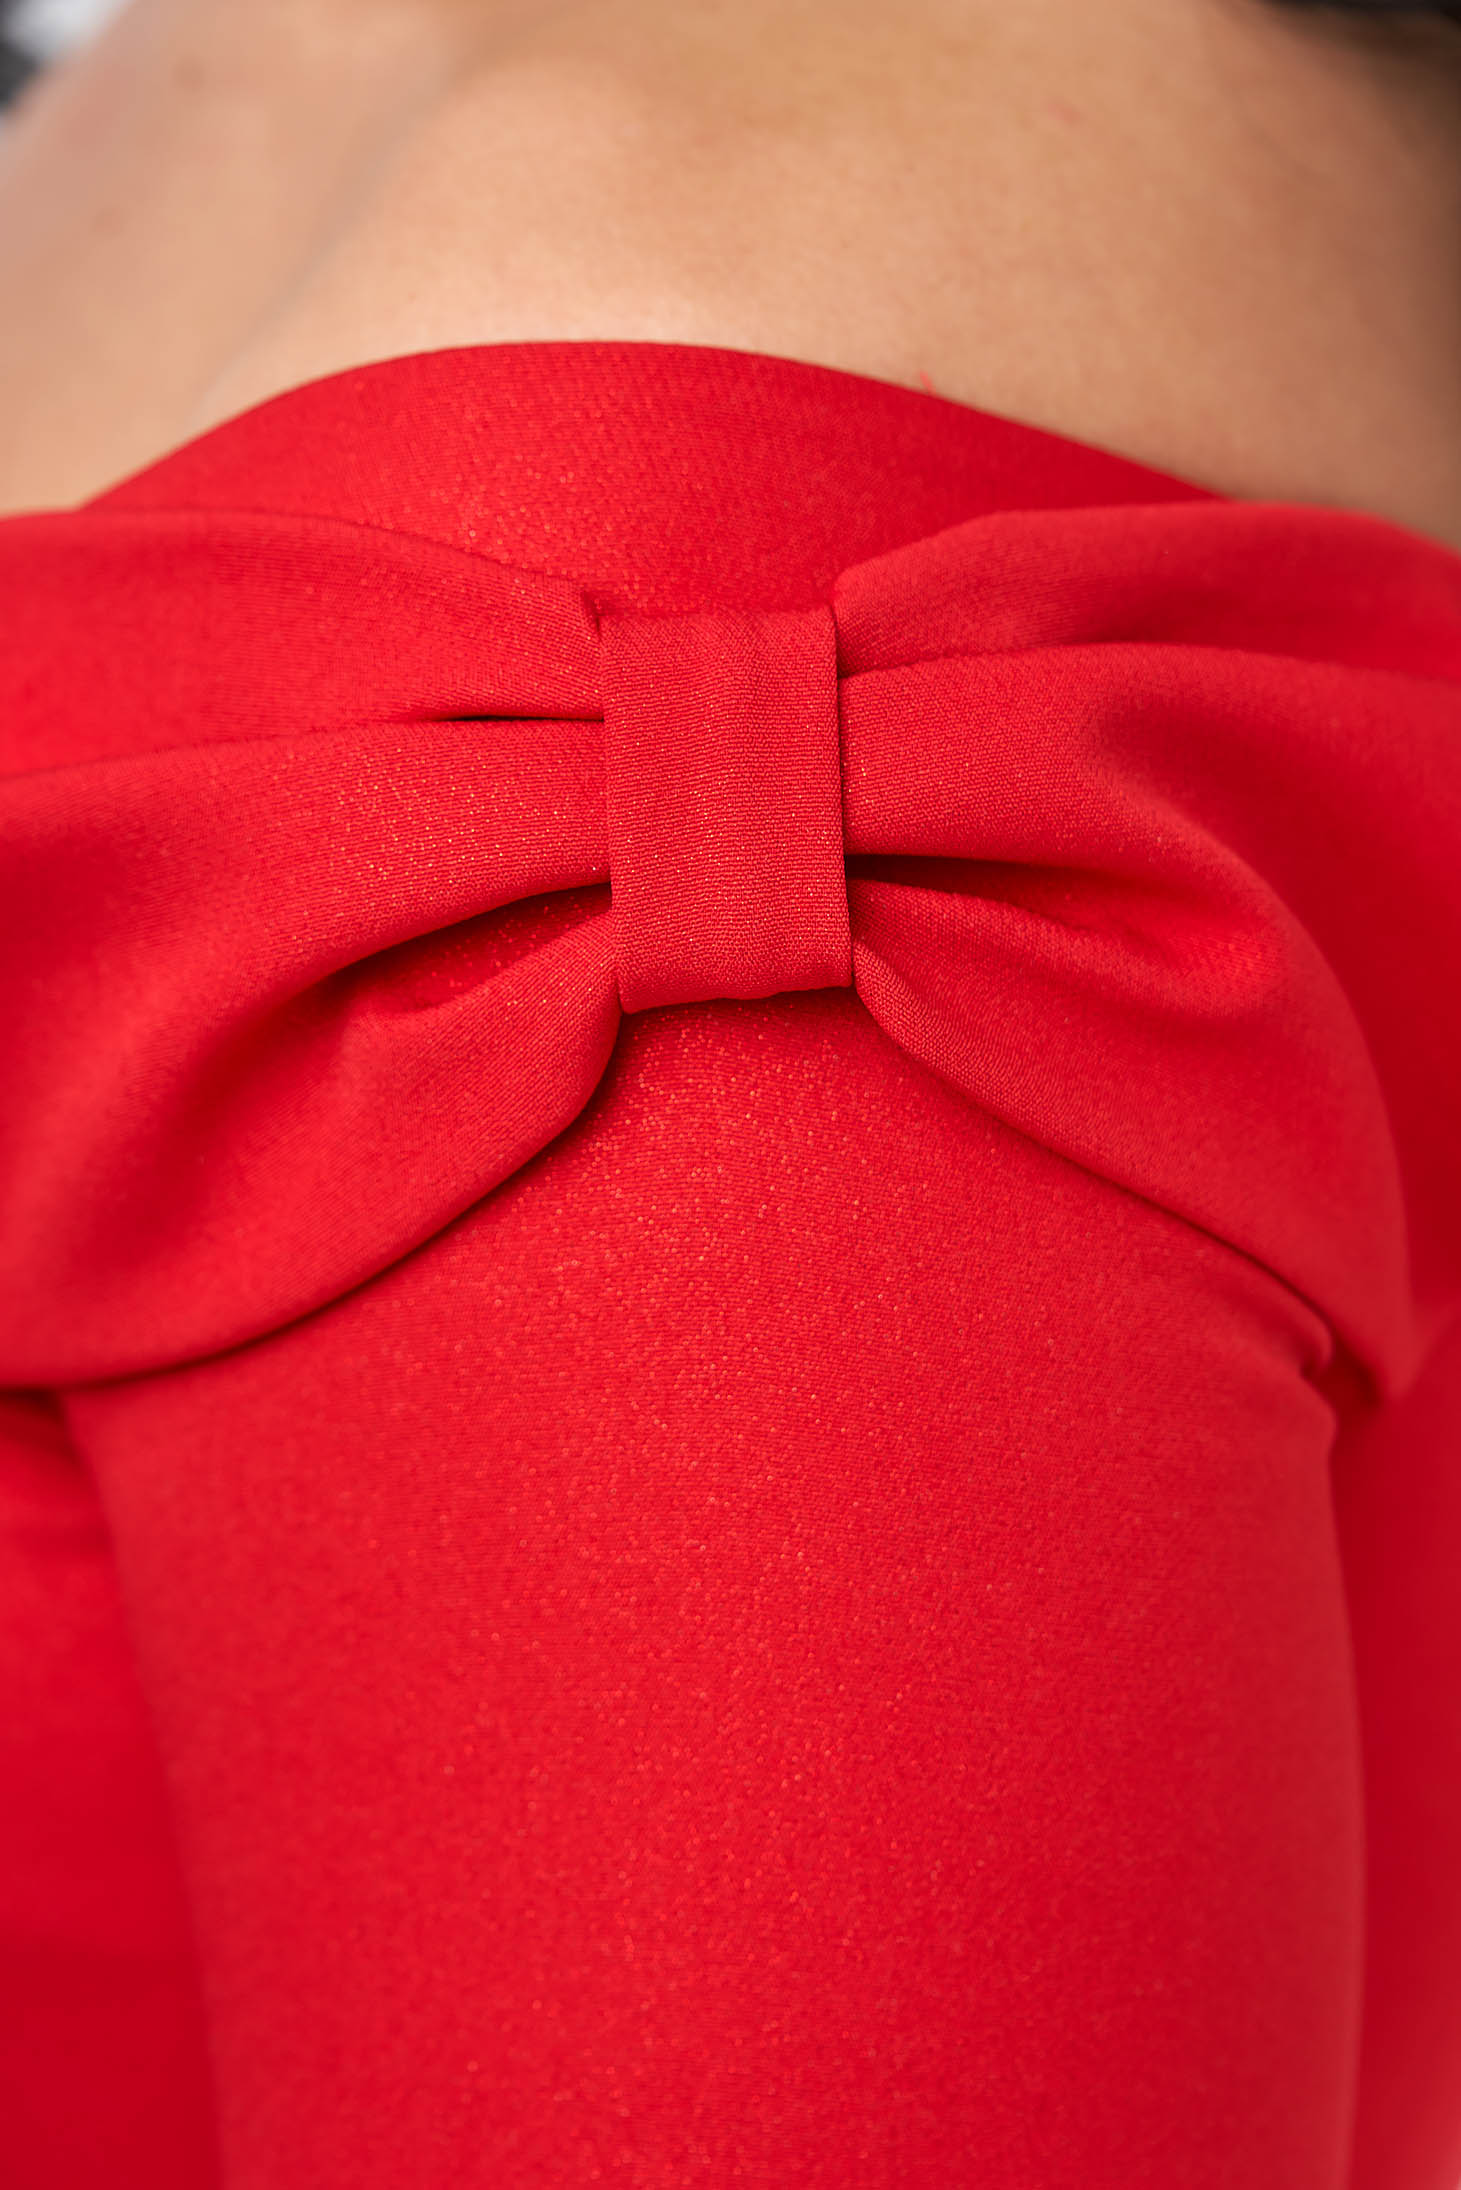 Rochie din stofa usor elastica rosie midi tip creion cu decolteu in v si fundite pe maneca - StarShinerS 5 - StarShinerS.ro